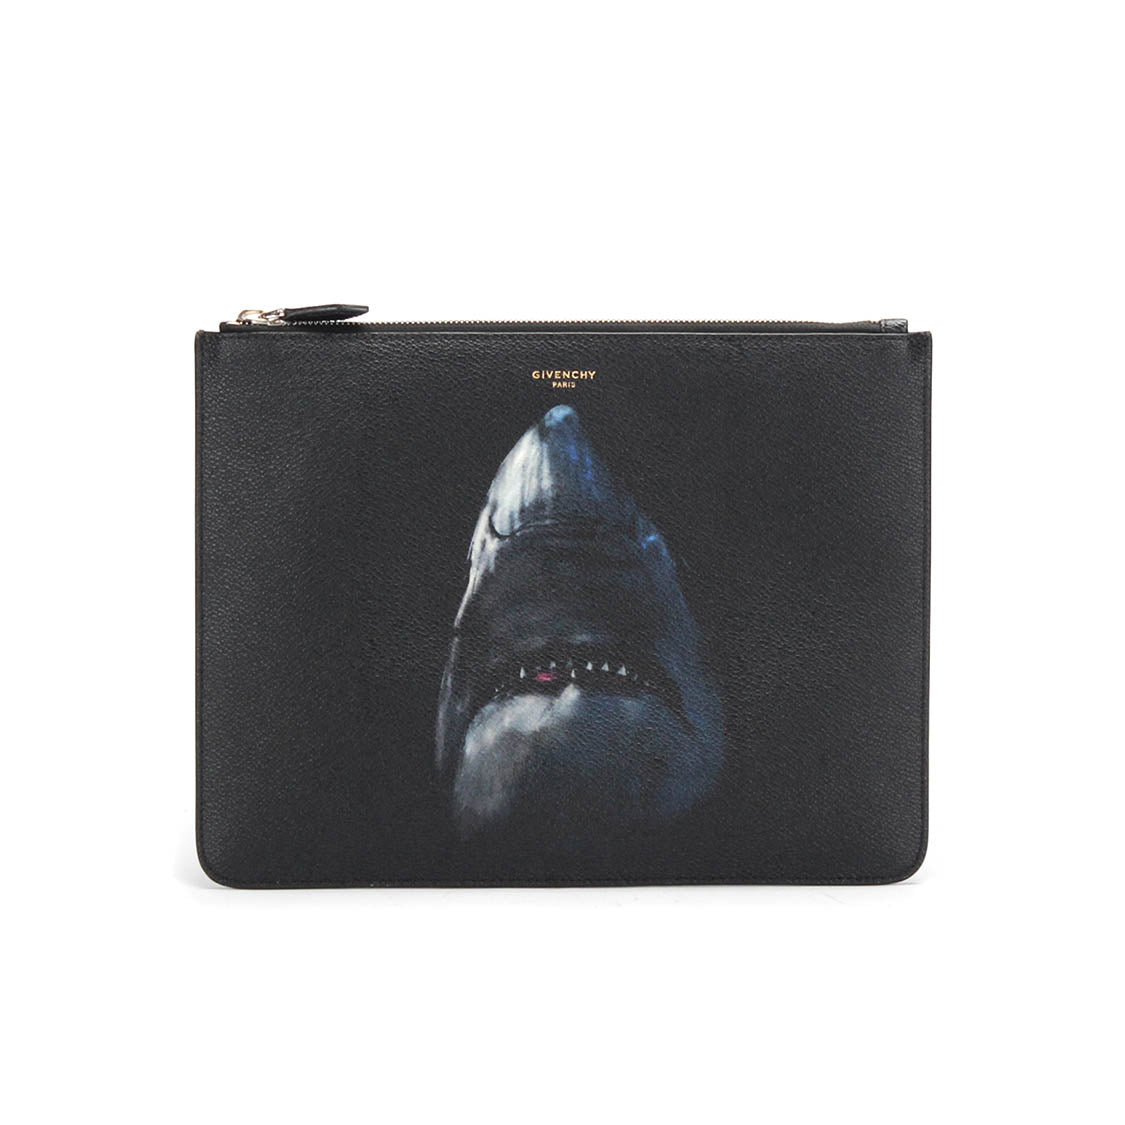 Shark Print Leather Clutch Bag